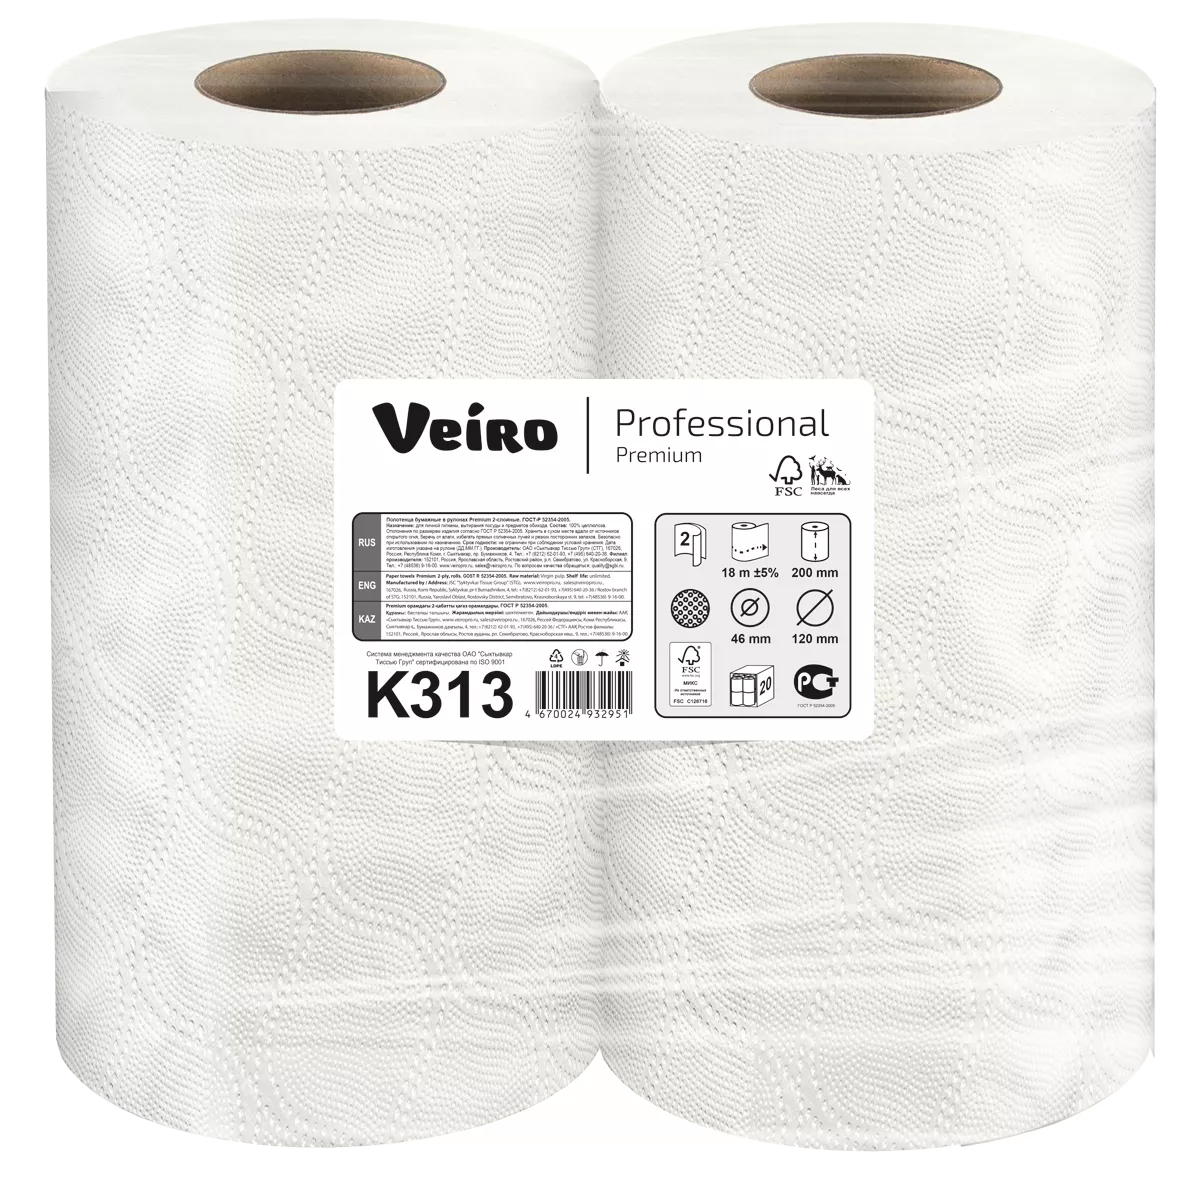 Veiro professional Premium k313. Туалетная бумага Veiro professional Premium t309,. Полотенца бумажные Veiro professional. Veiro professional t11200. Бумажные полотенца артикул